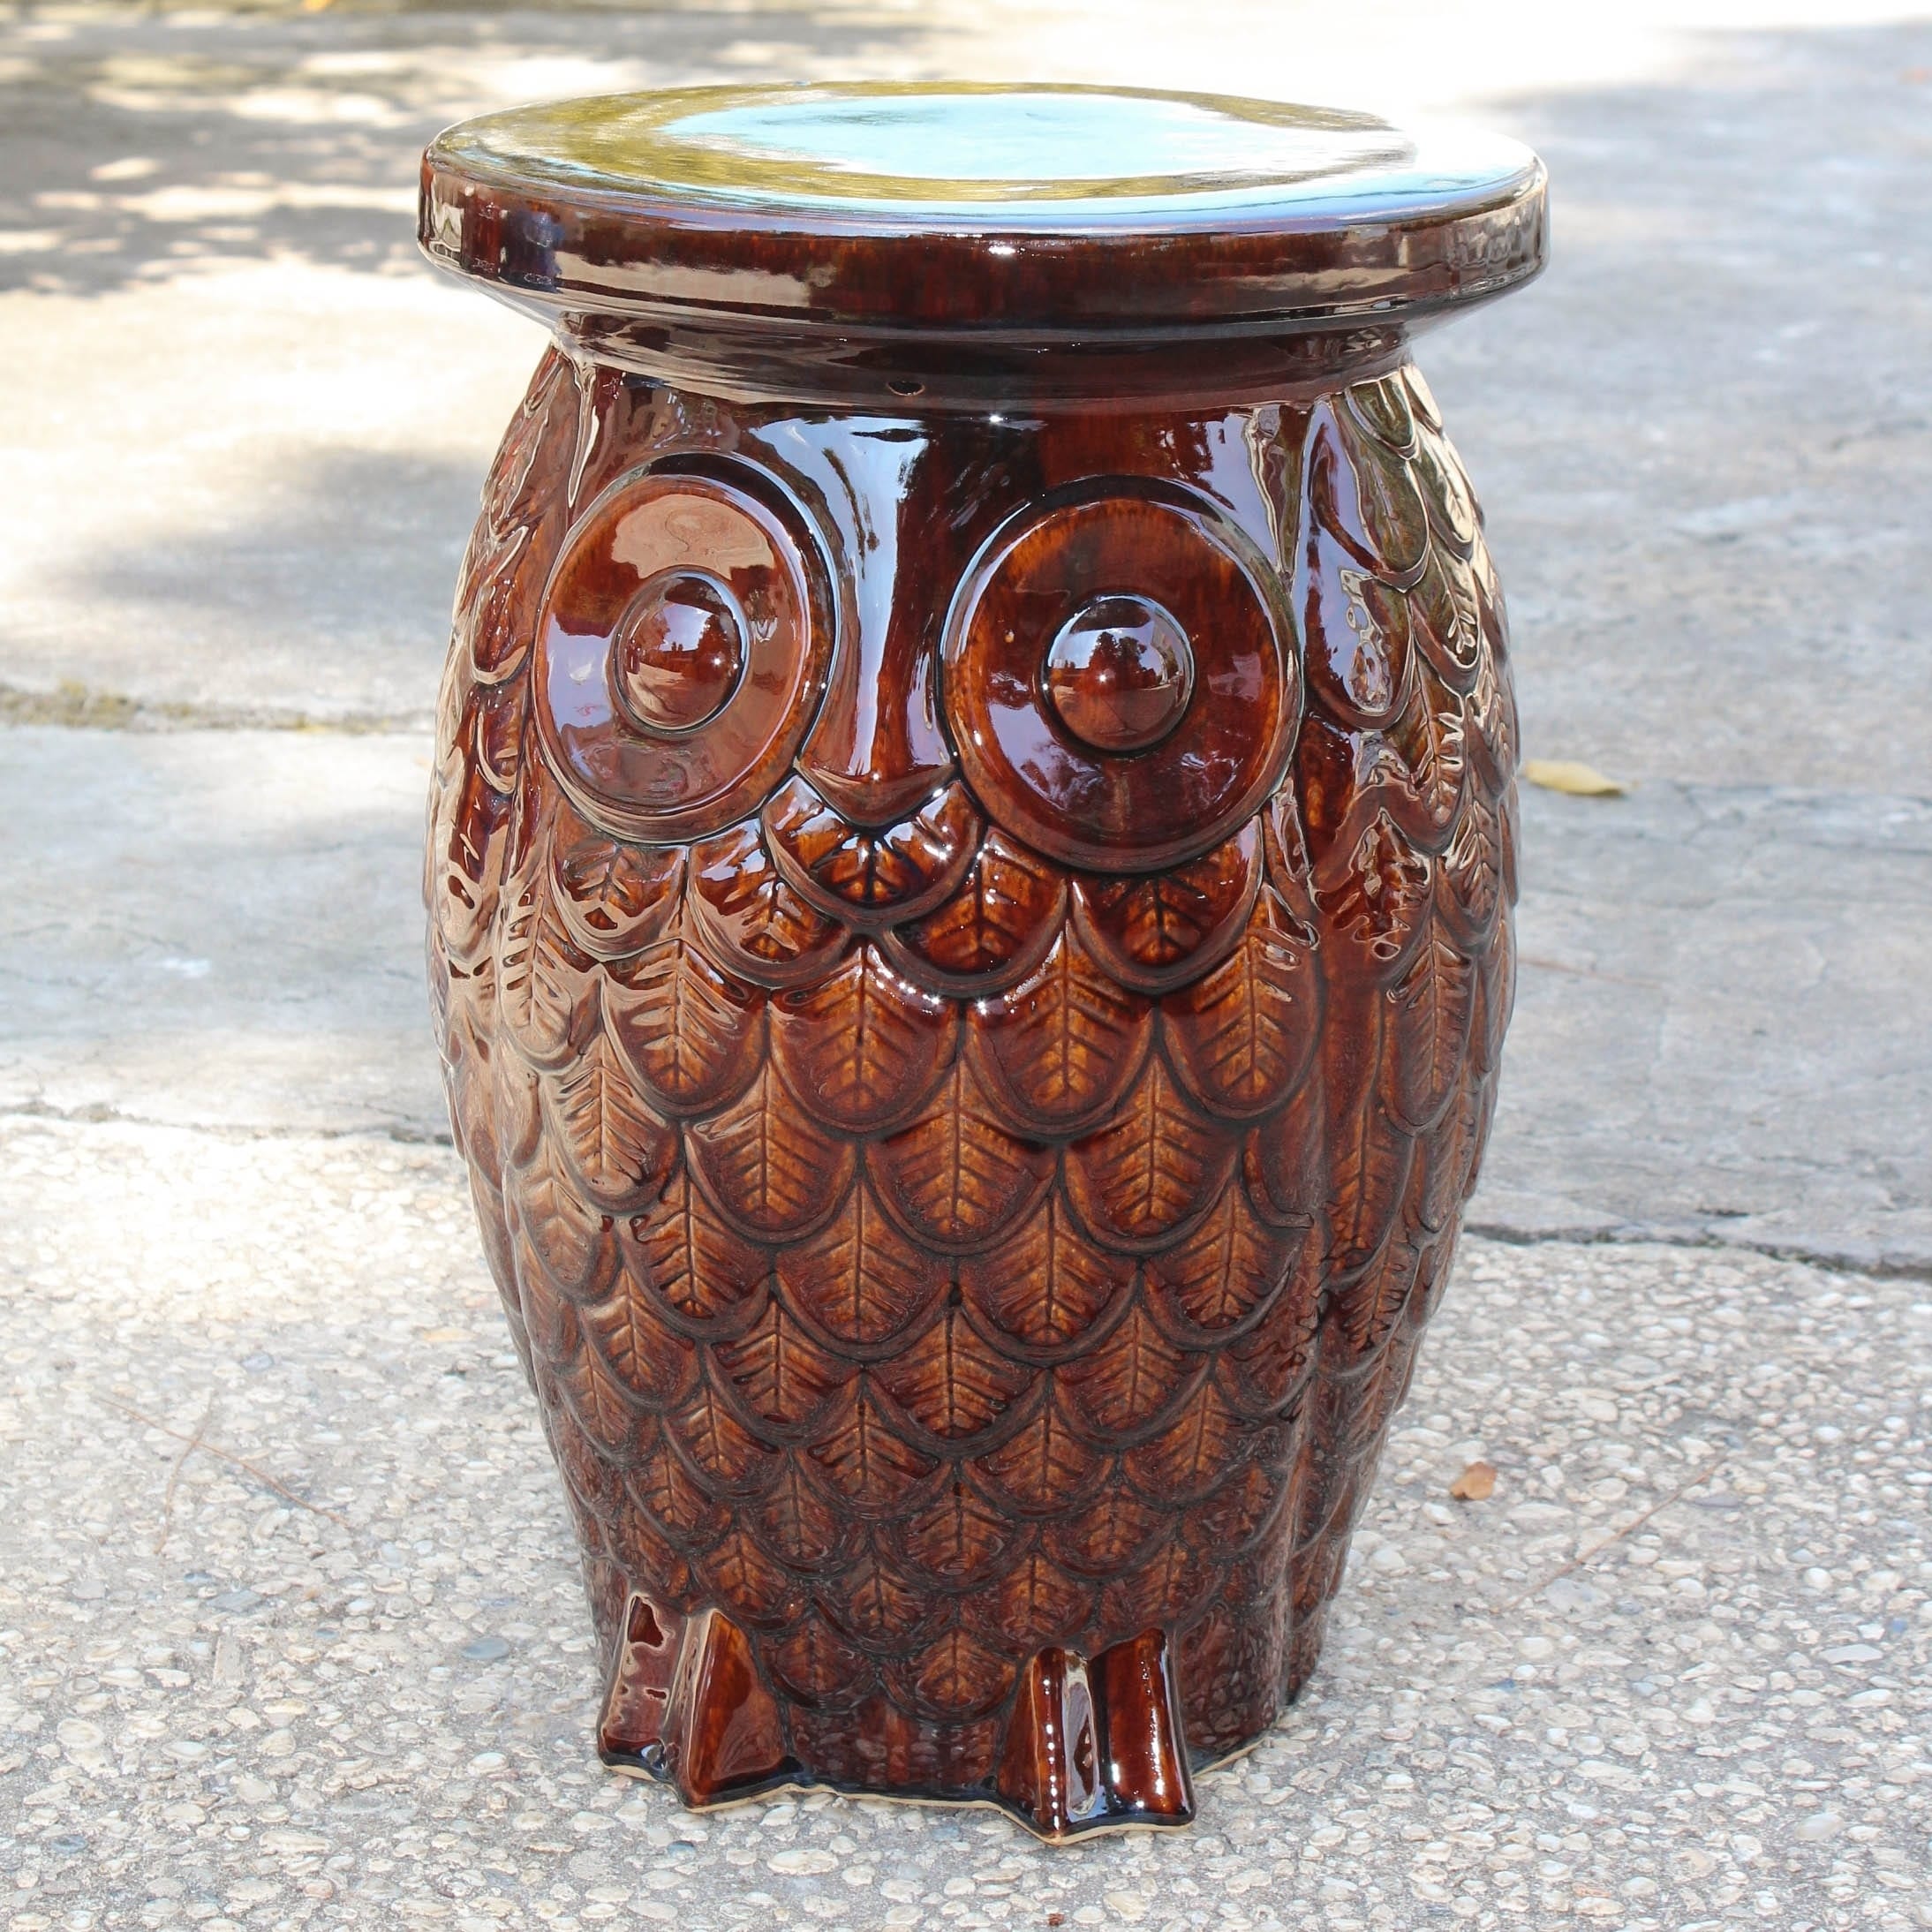 International Caravan Wise Old Owl Ceramic Garden Stool - image 4 of 5